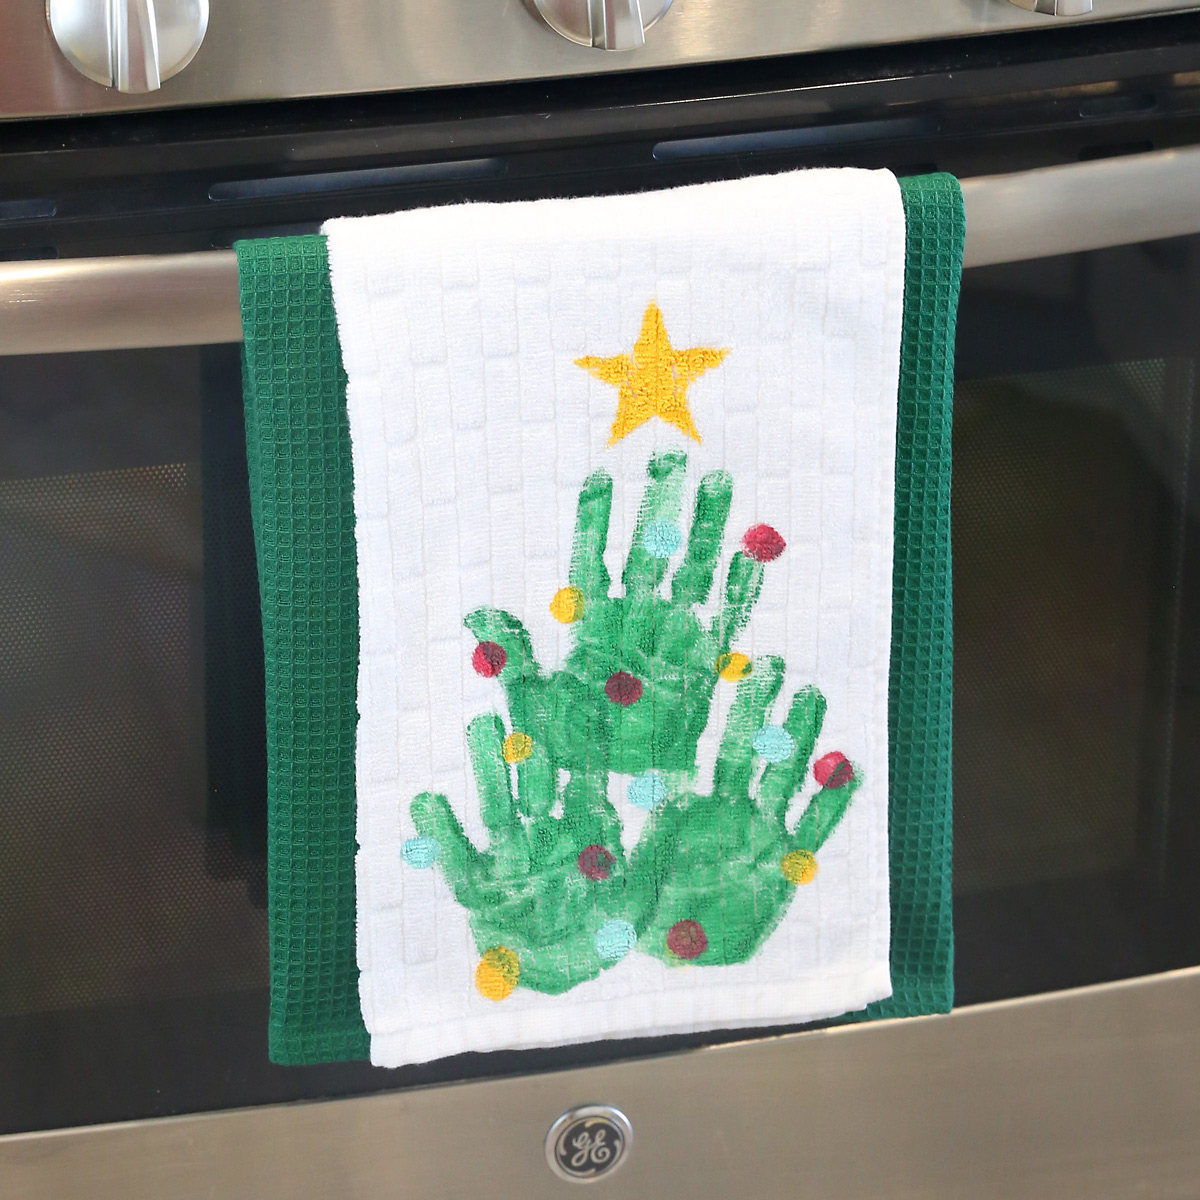 Dish Towel: DIY Image Transfer Tutorial 